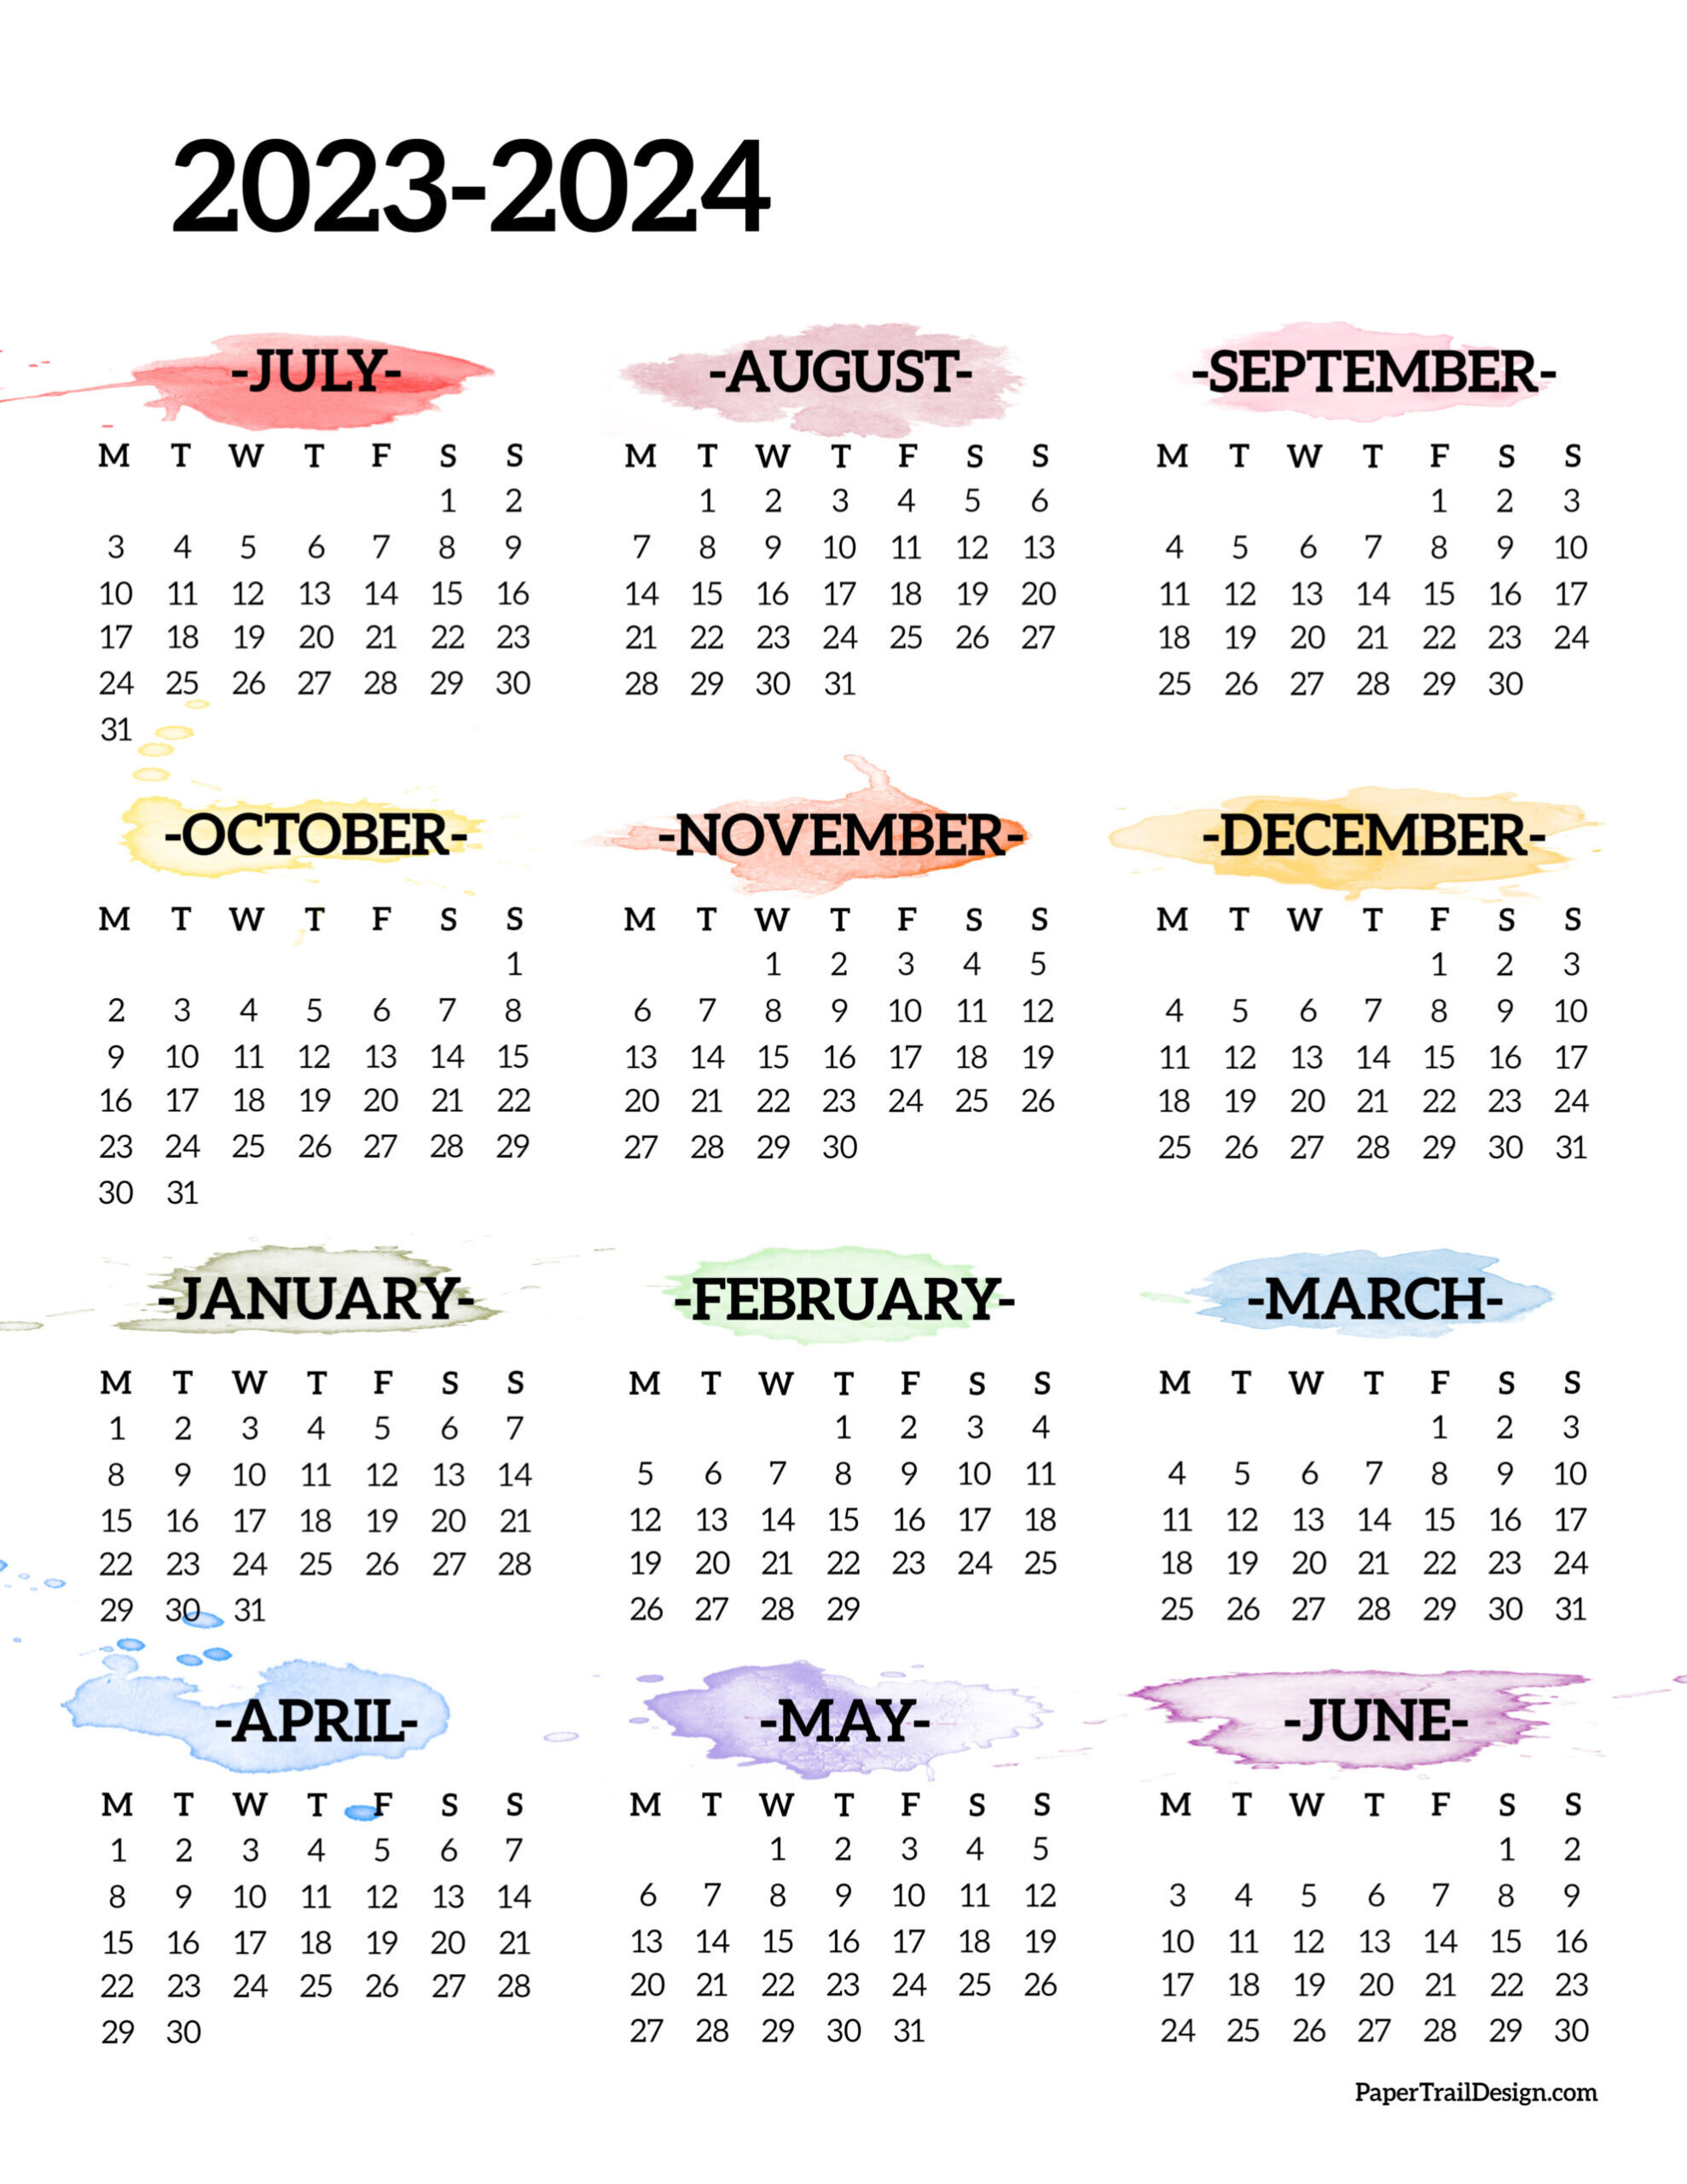 2023-2024 School Year Calendar Free Printable - Paper Trail Design in Calendar August 2023-June 2024